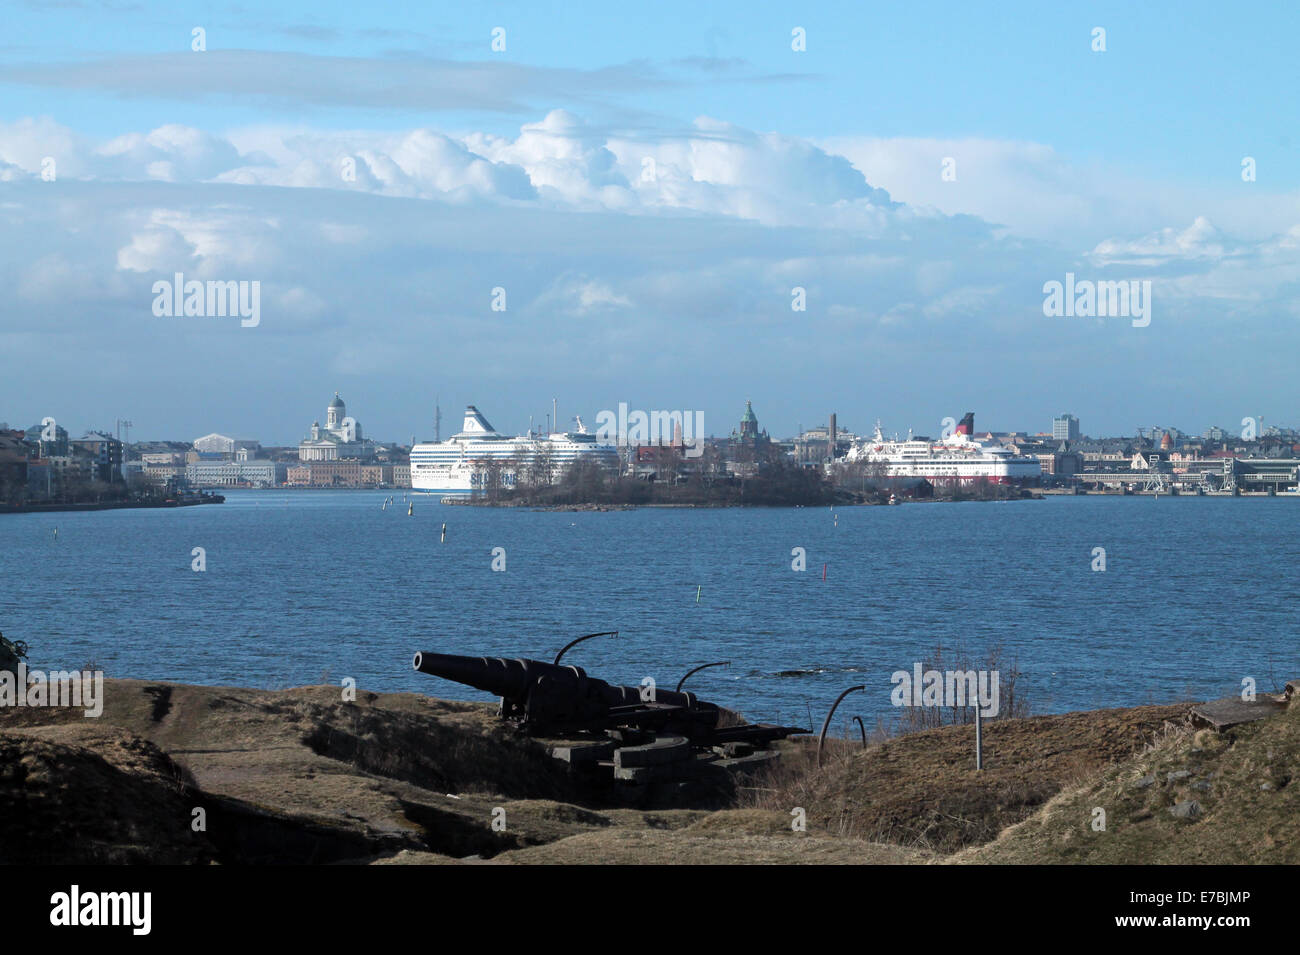 Ships in Helsinki South Harbor seen from Suomenlinna island Stock Photo